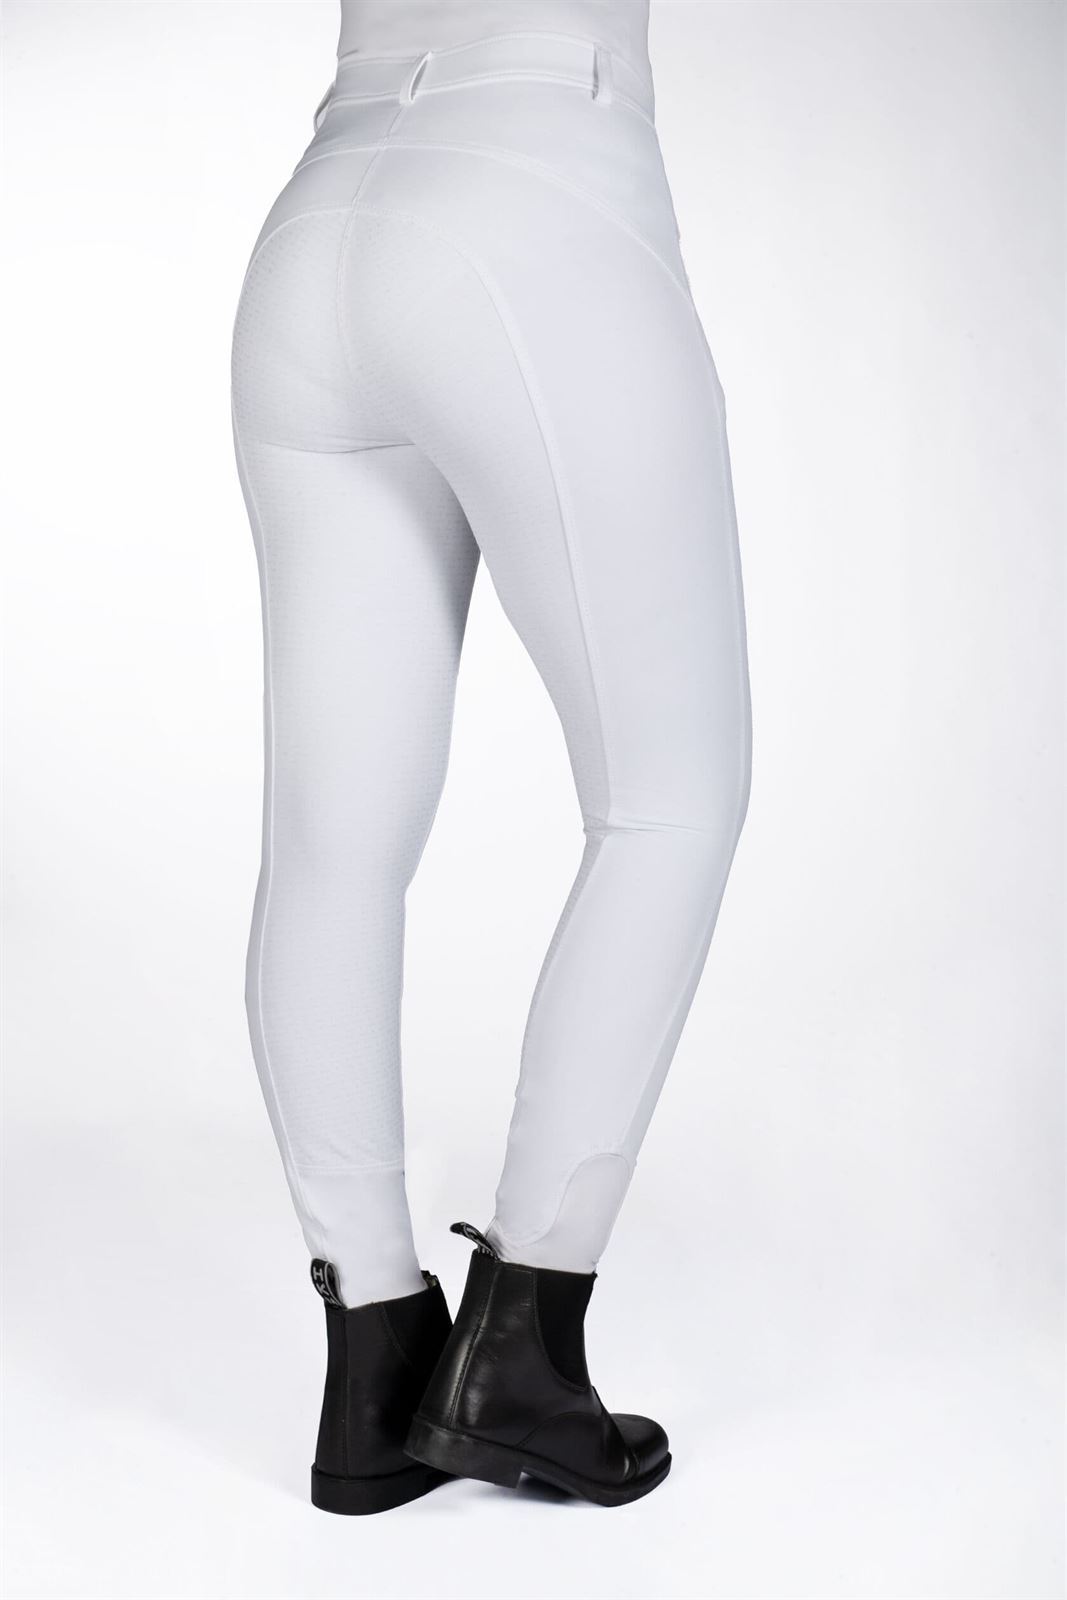 Pantalón mujer HKM Sports Equipment Alexis culera de grip, color blanco - Imagen 3